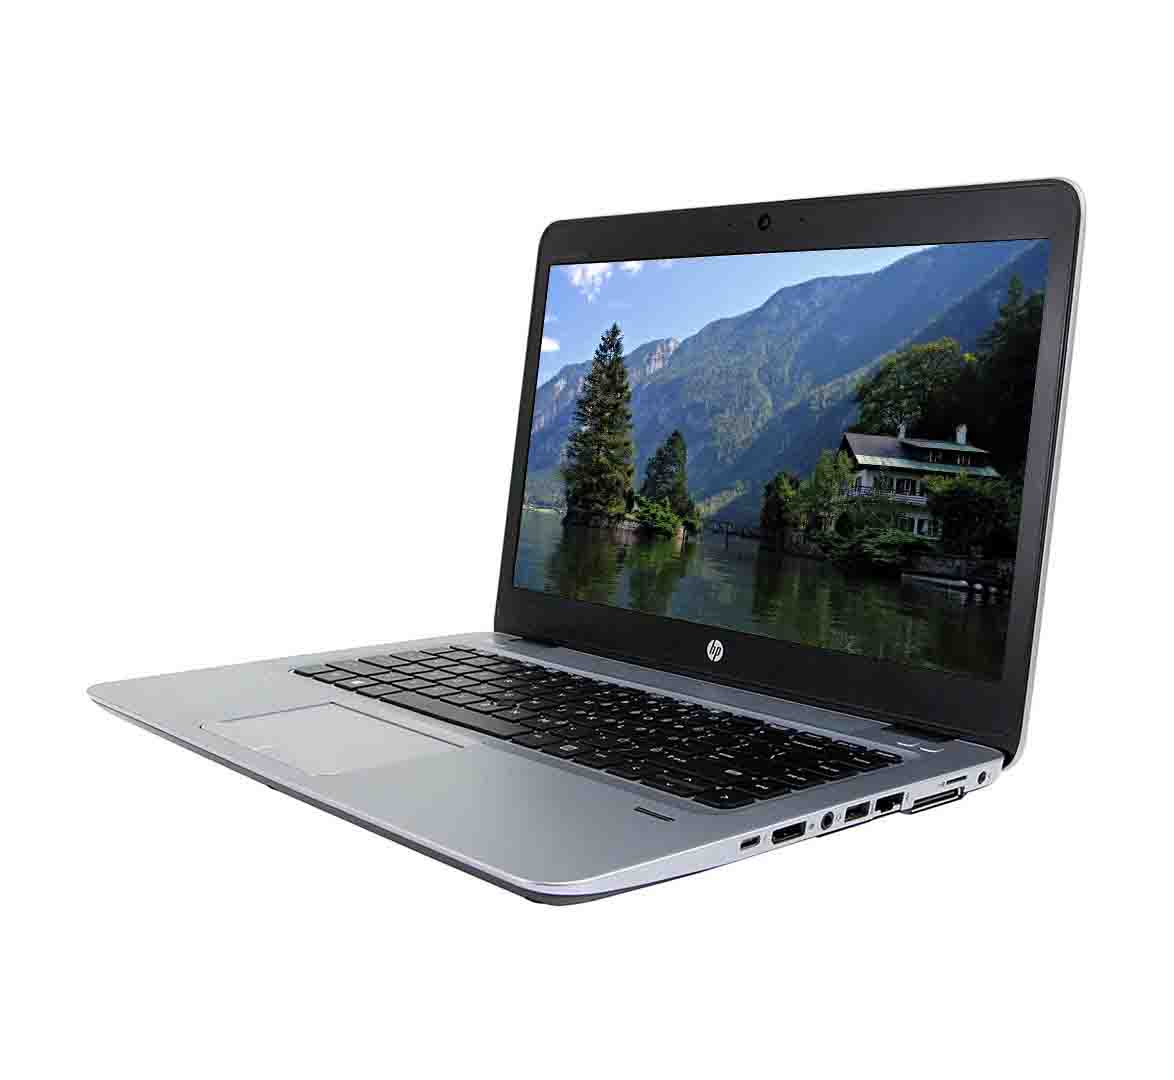 HP EliteBook 840 G4, Intel Core i5-7th Generation CPU, 16GB RAM, 256GB SSD, 14 inch Touchscreen, Windows 10 Pro